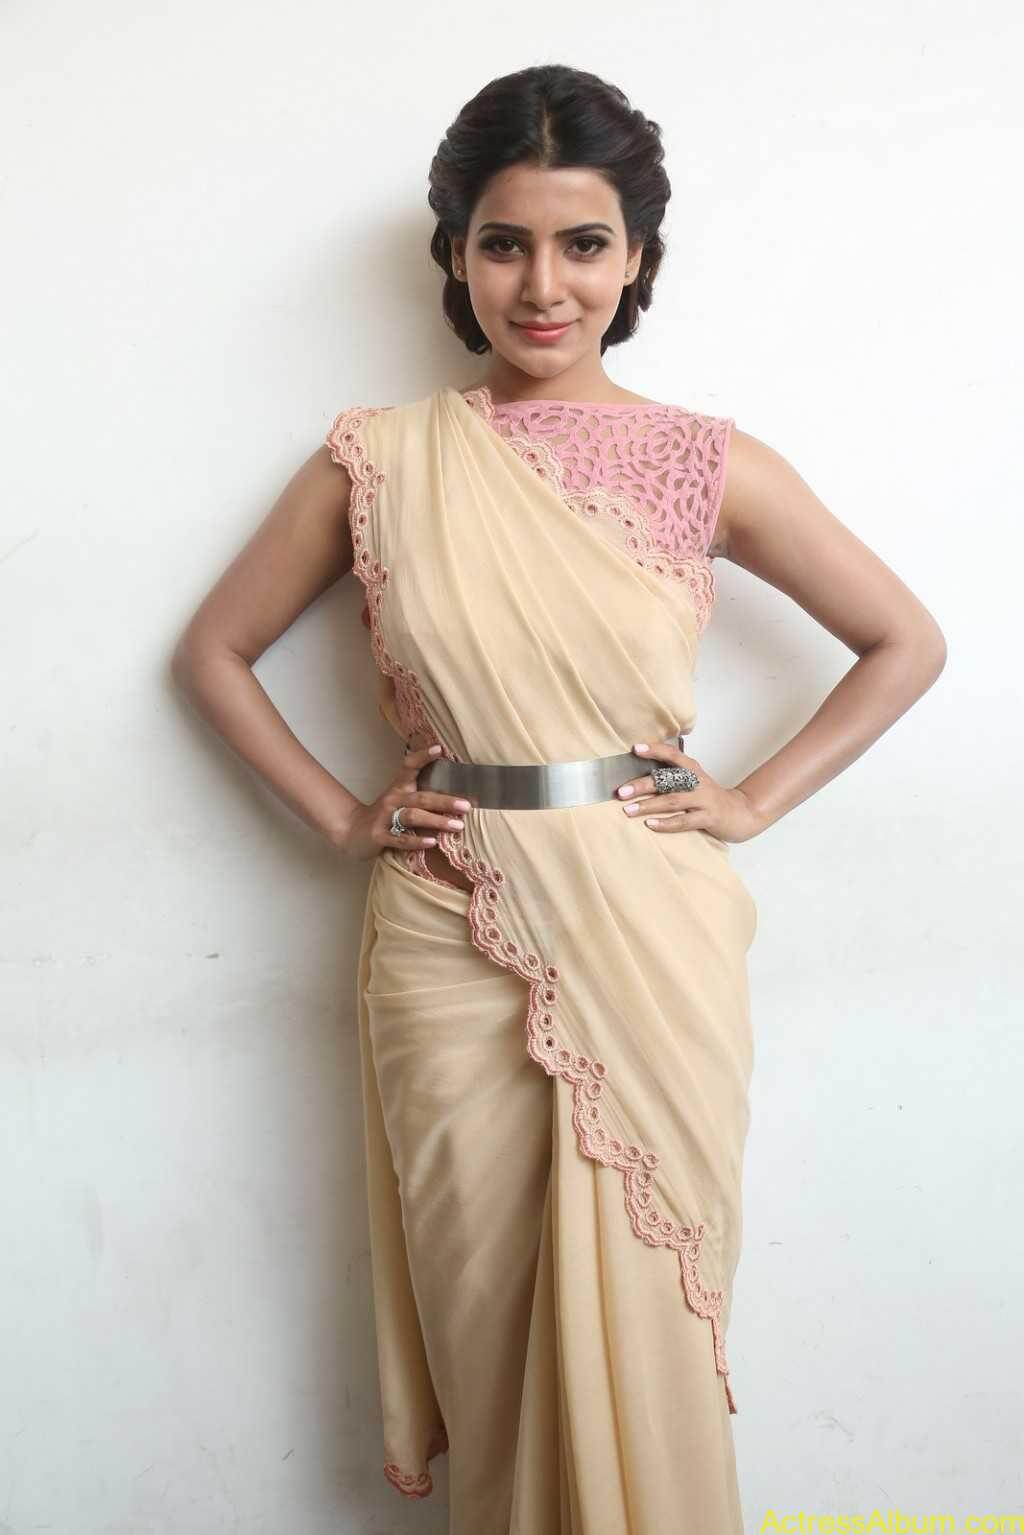 Samantha Designer Pink Saree Stills - Actress Album